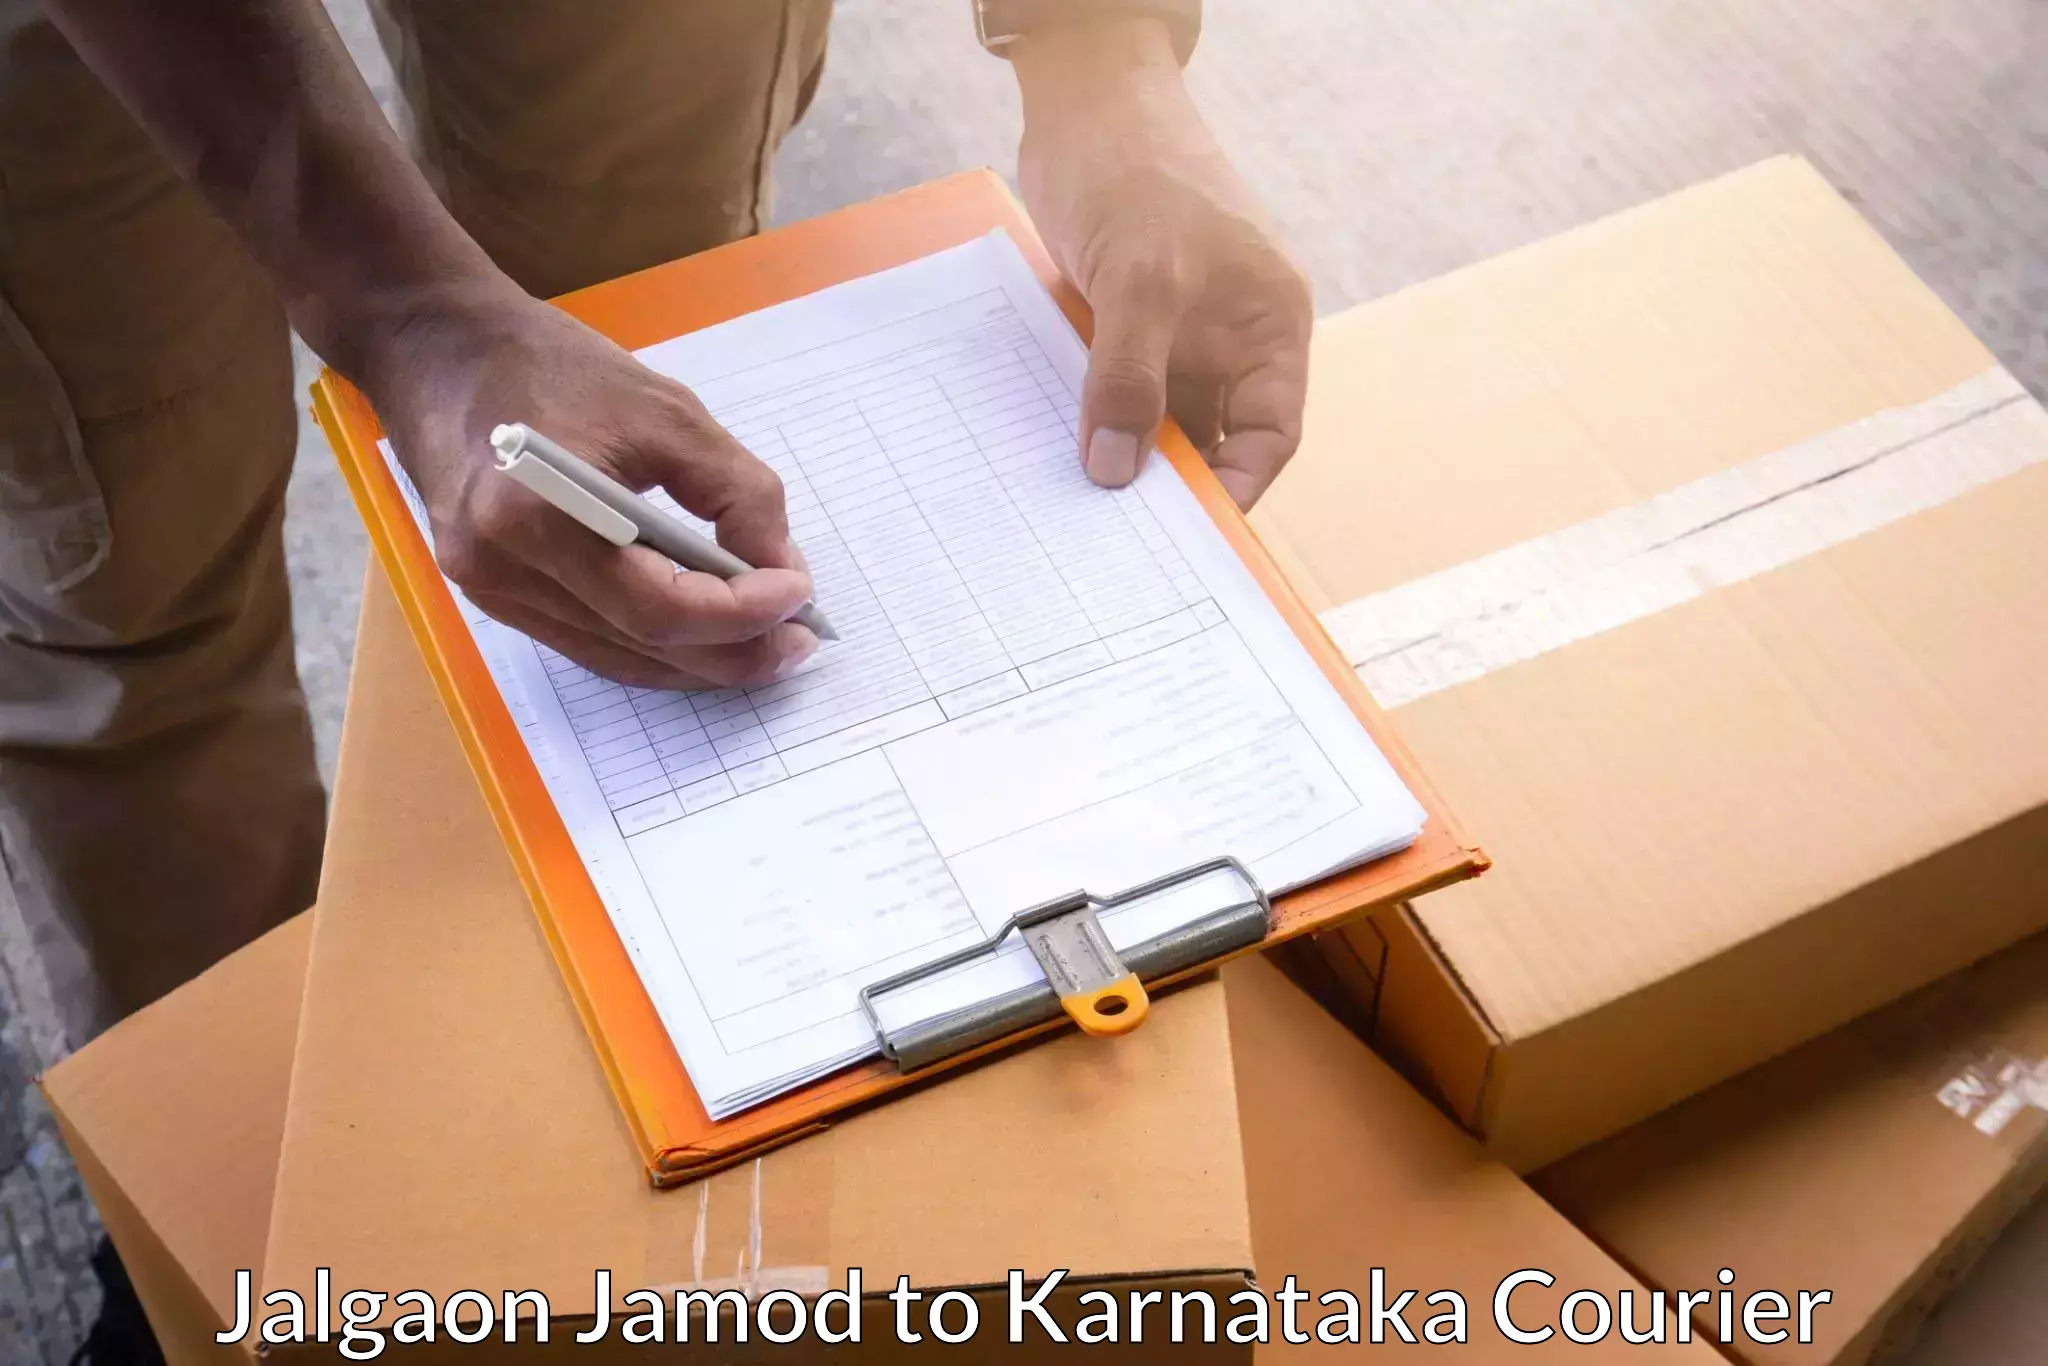 High value parcel delivery Jalgaon Jamod to Hungund